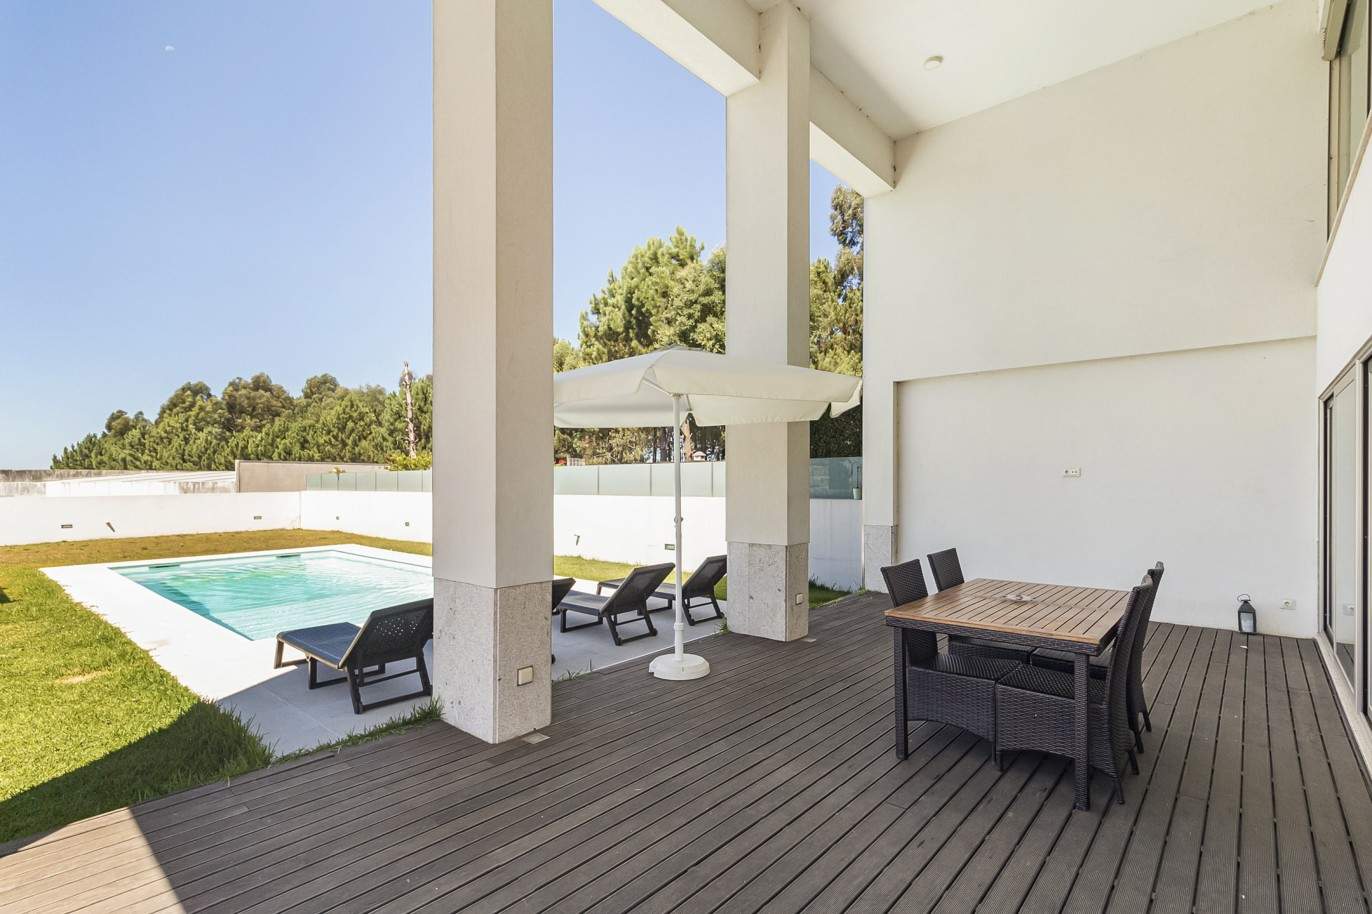 selling-3-bedroom-villa-with-swimming-pool-near-the-beach-madalena-v-n-gaia-porto-portugal